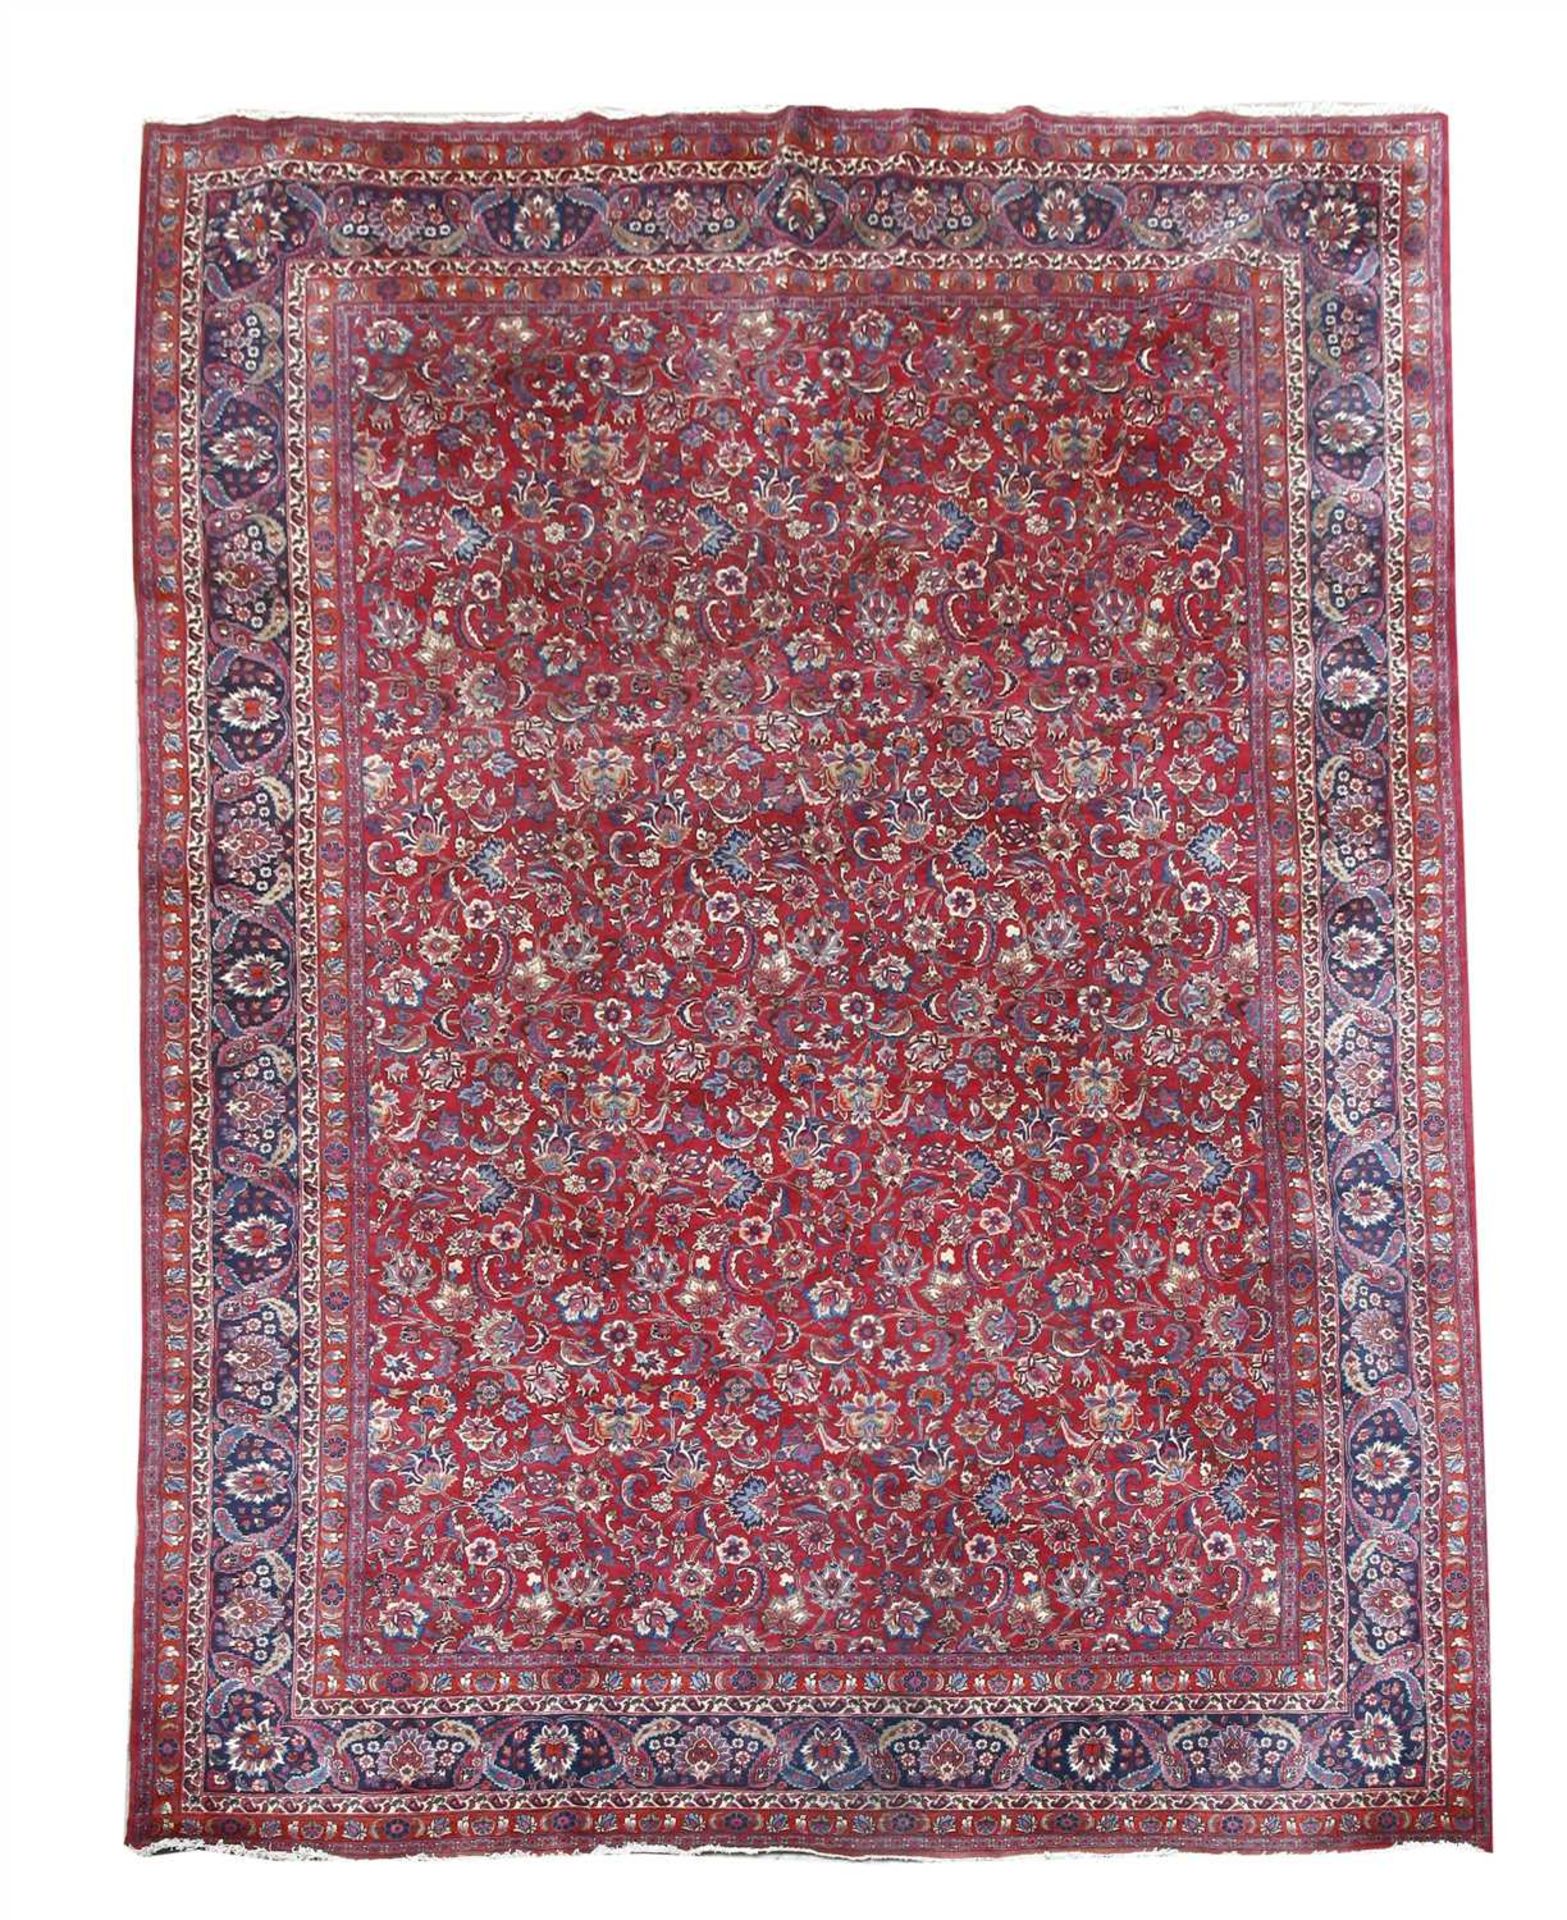 A Mashed carpet,